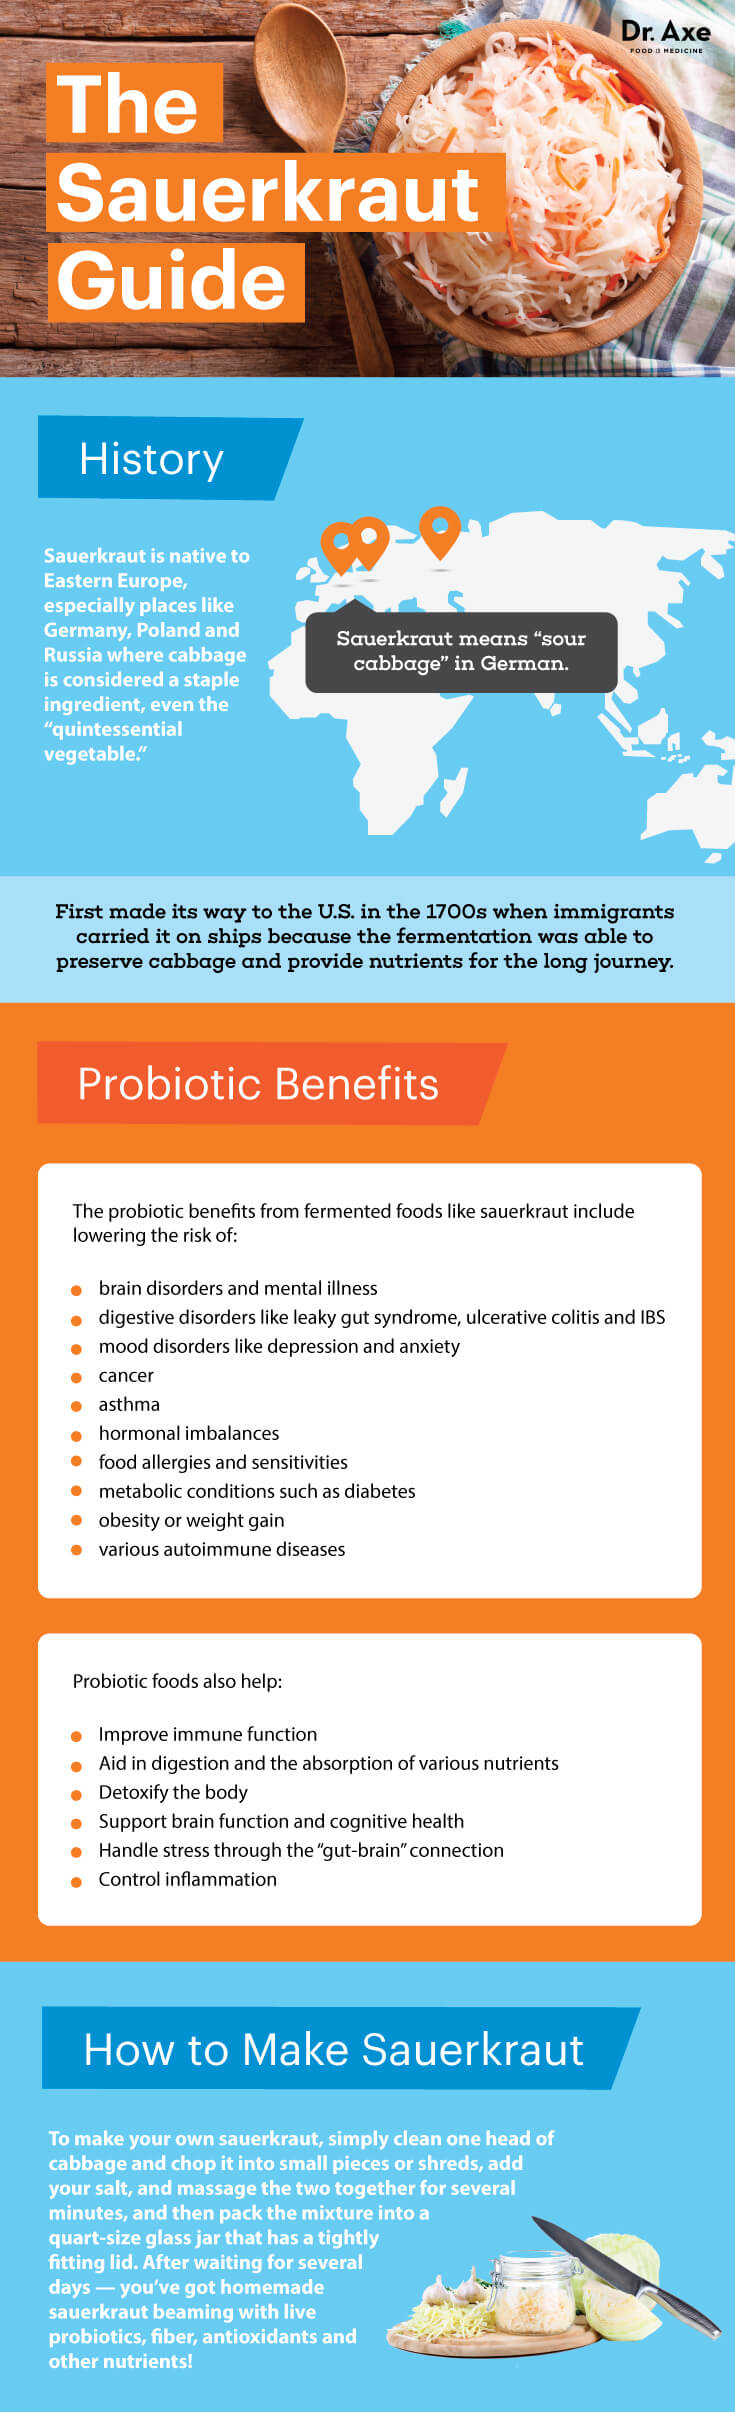 Benefits of Probiotics and Sauerkraut by Dr Josh Axe